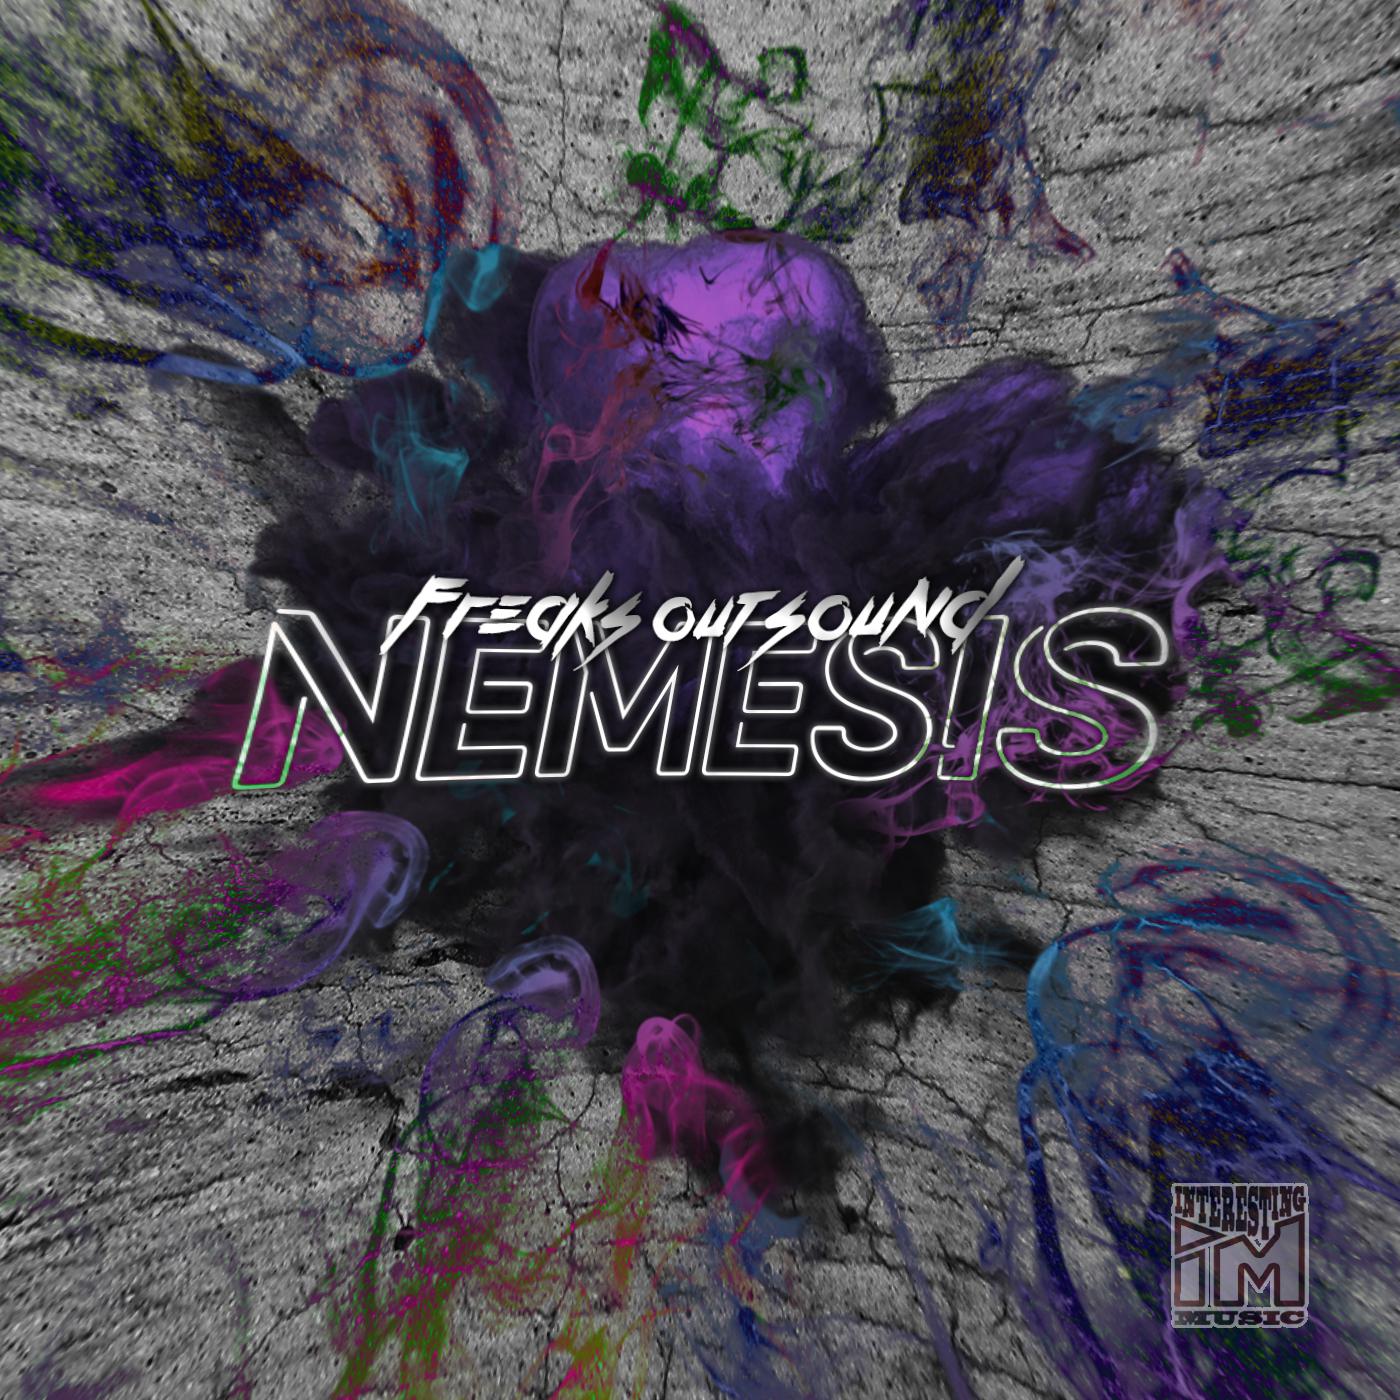 Freaks Out Sound - Nemesis (Original Mix)